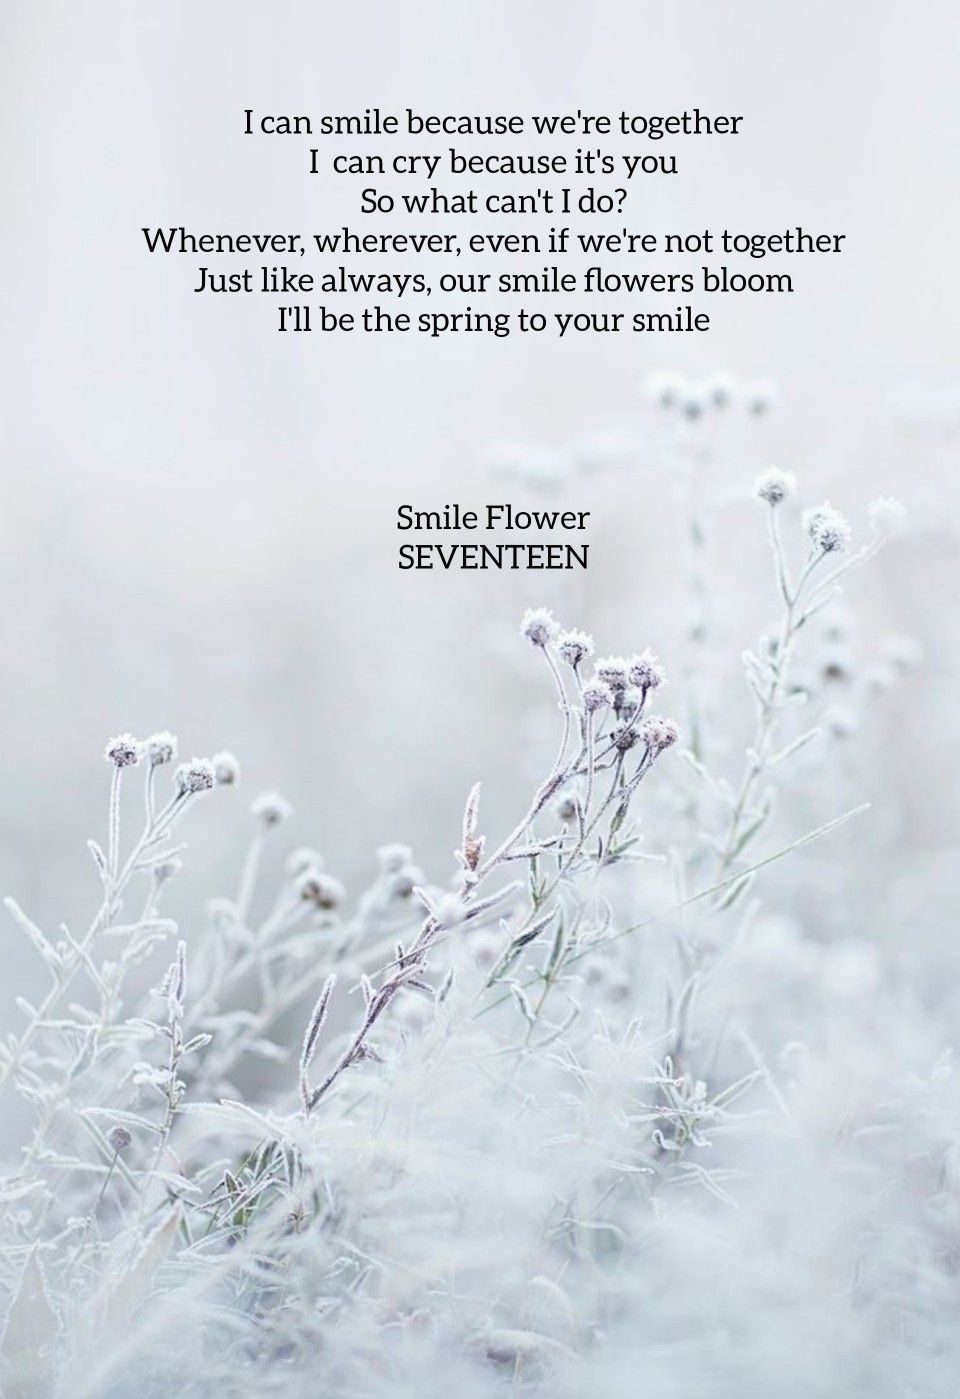 Seventeen Smile Flower Lyrics